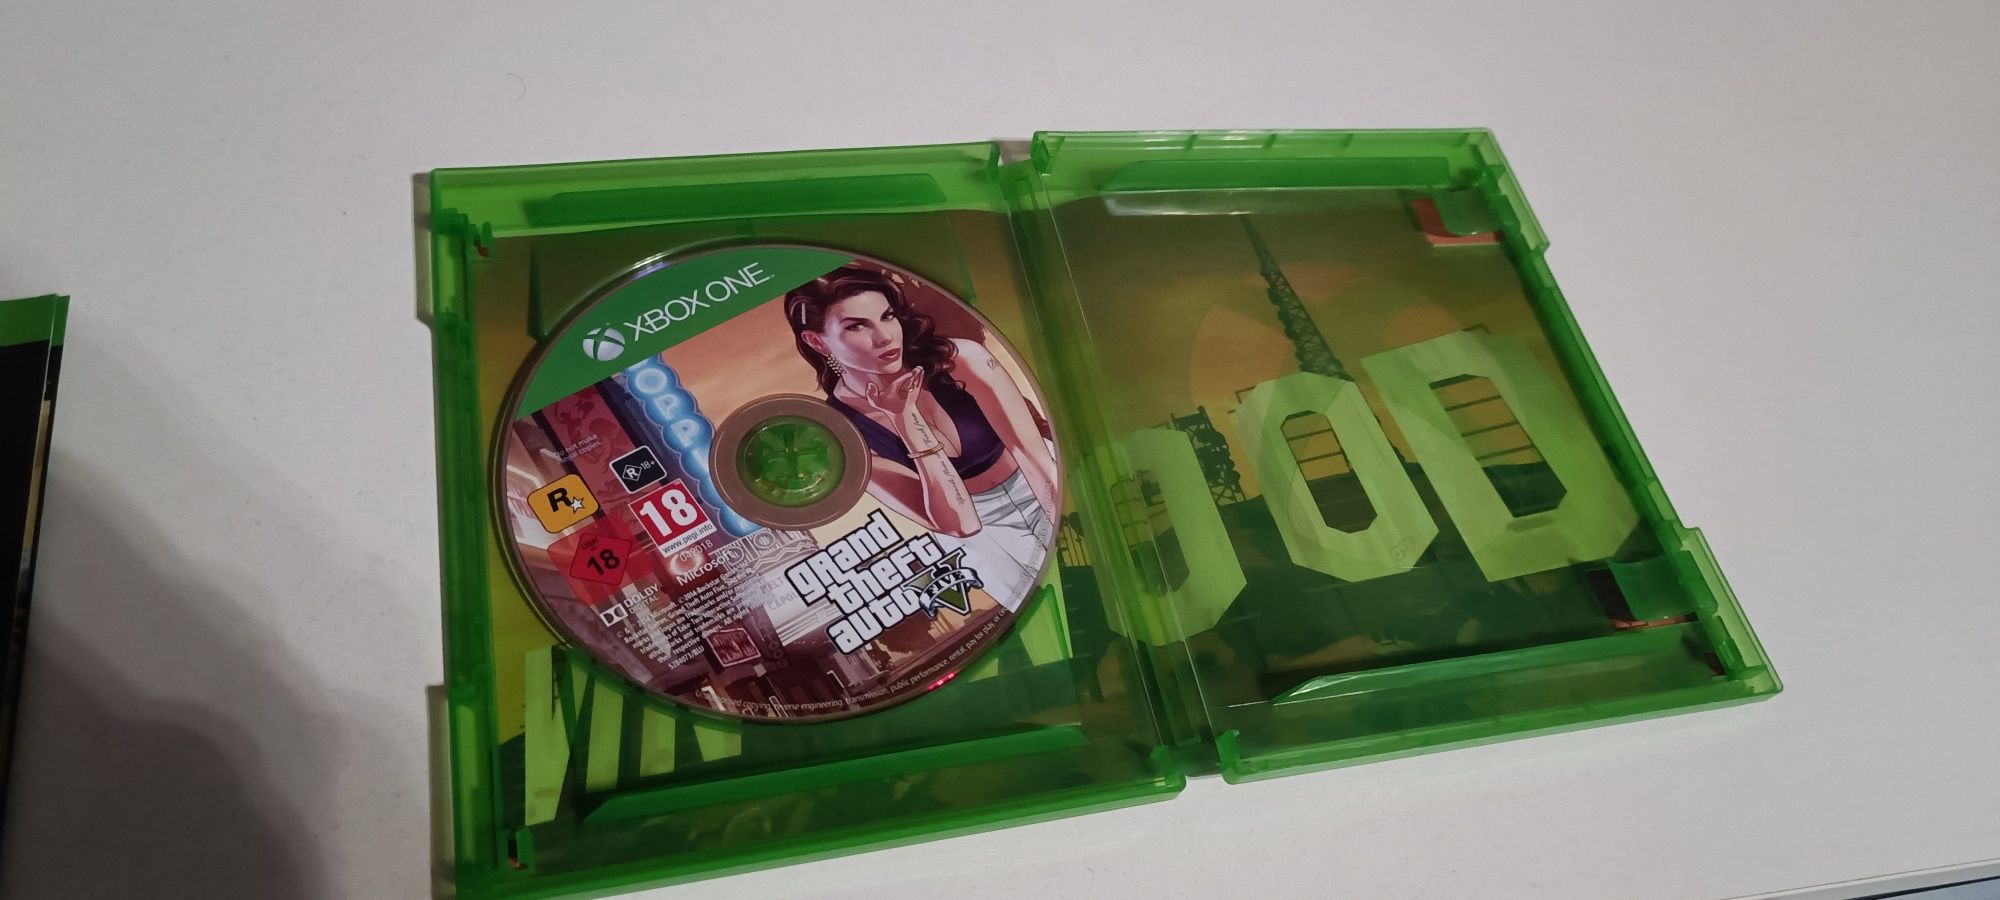 Gta 5 Premium Edition Xbox ONE